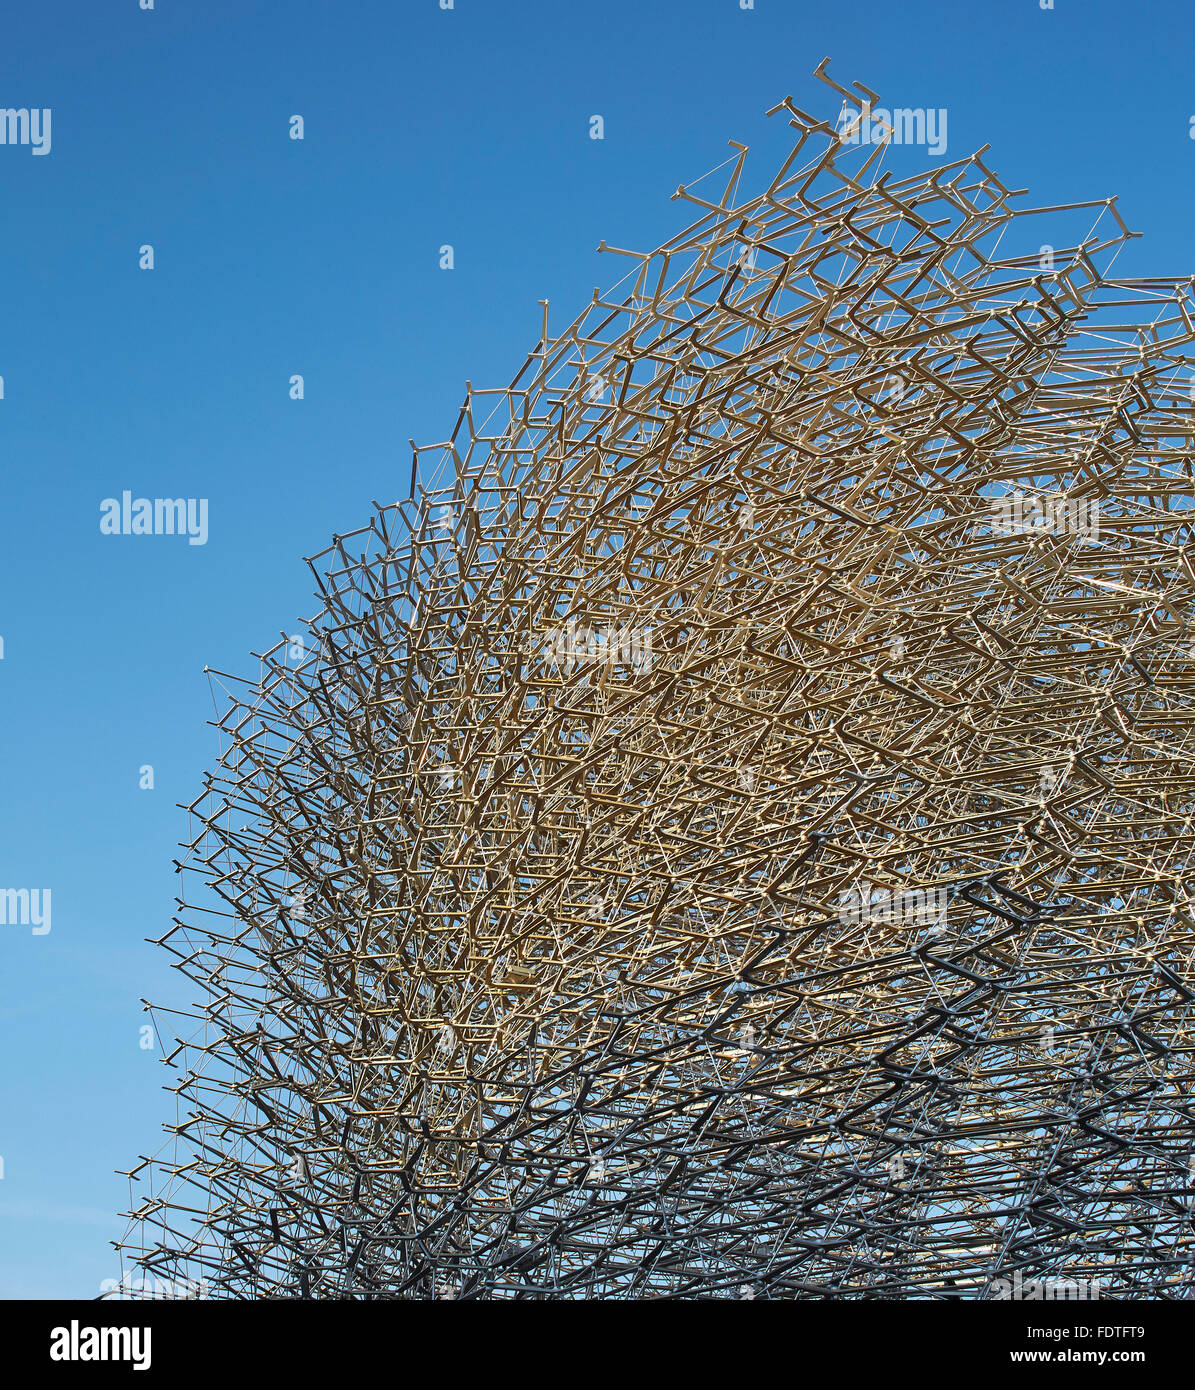 Detail of aluminium mesh. Milan Expo 2015, UK Pavilion, Milan, Italy. Architect: Wolfgang Buttress, 2015. Stock Photo